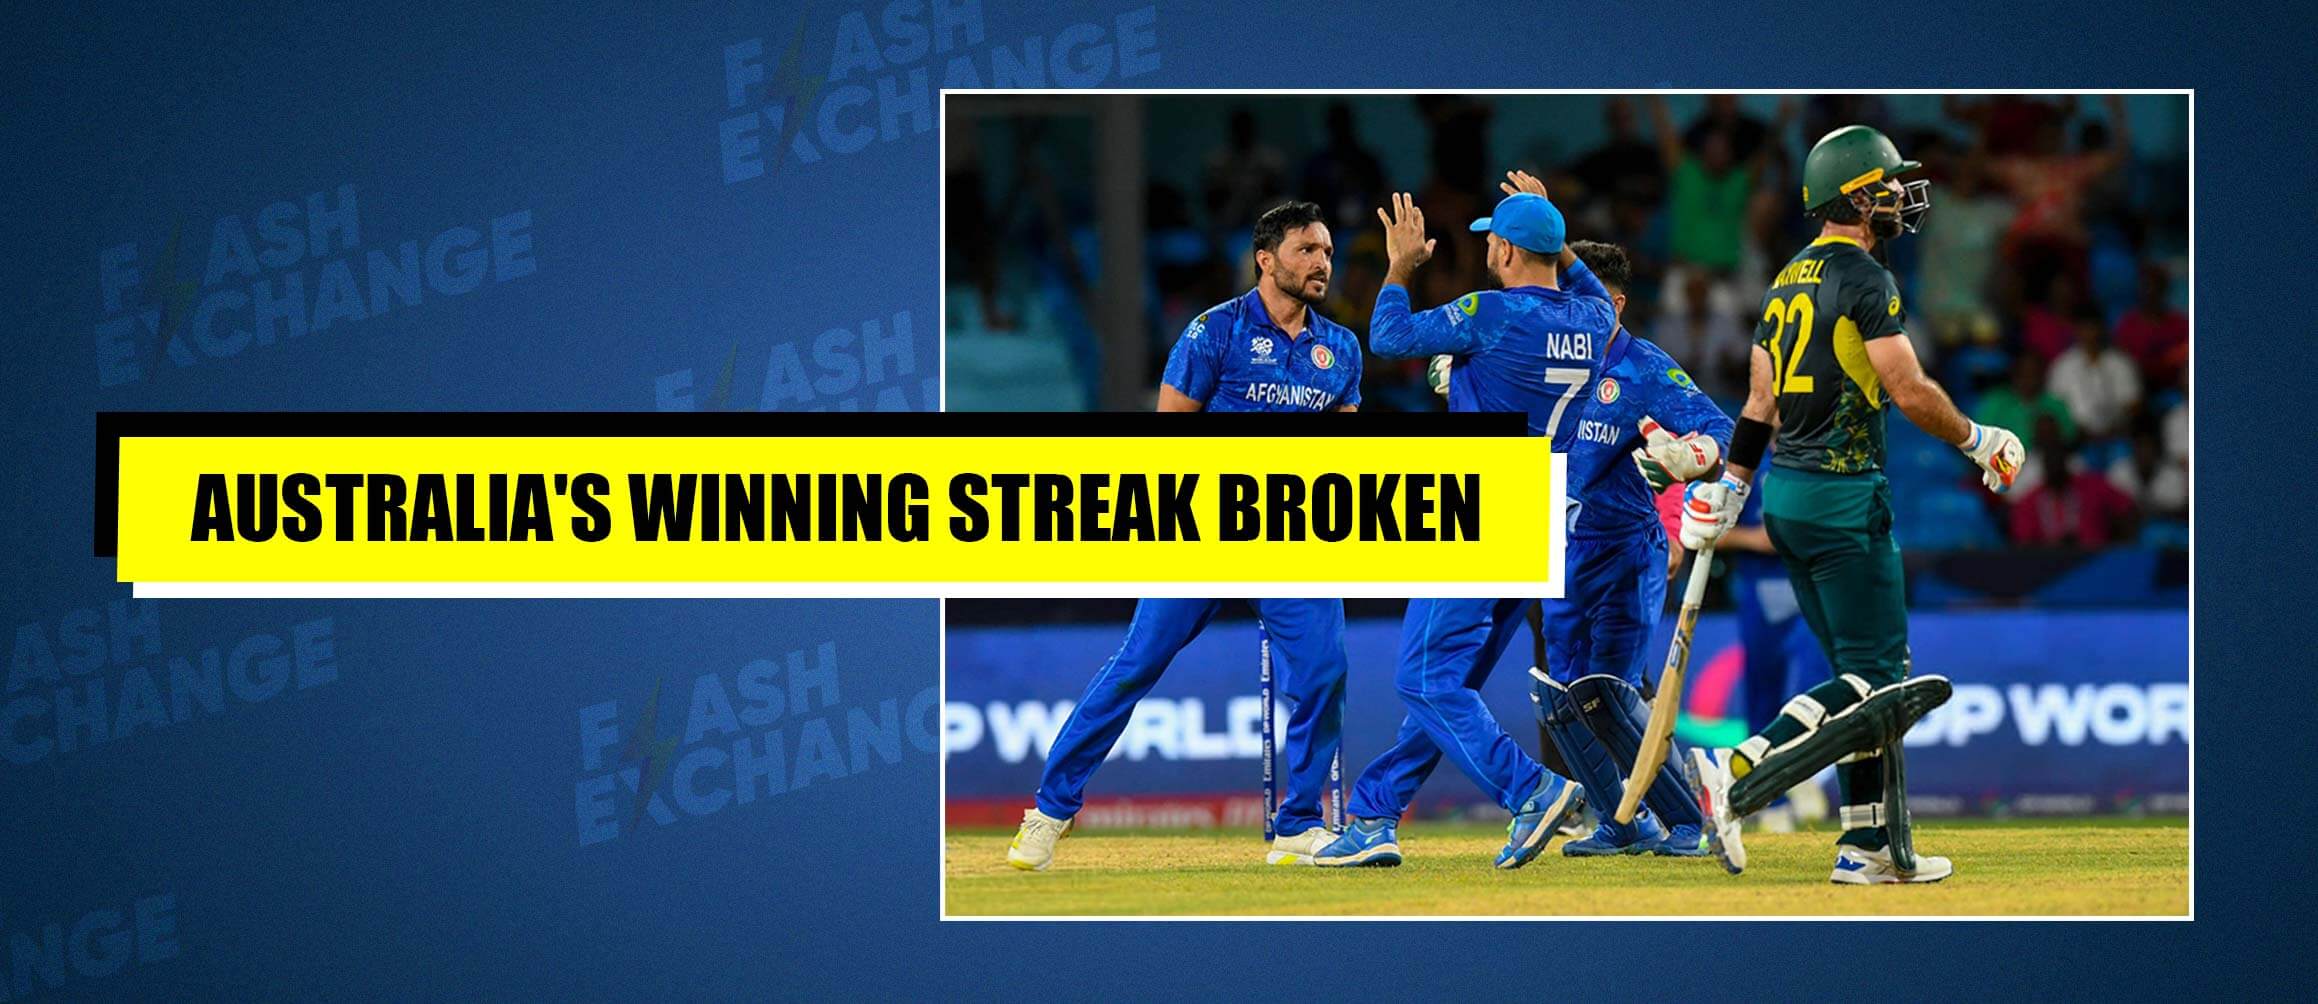 Australia’s Winning Streak Broken!